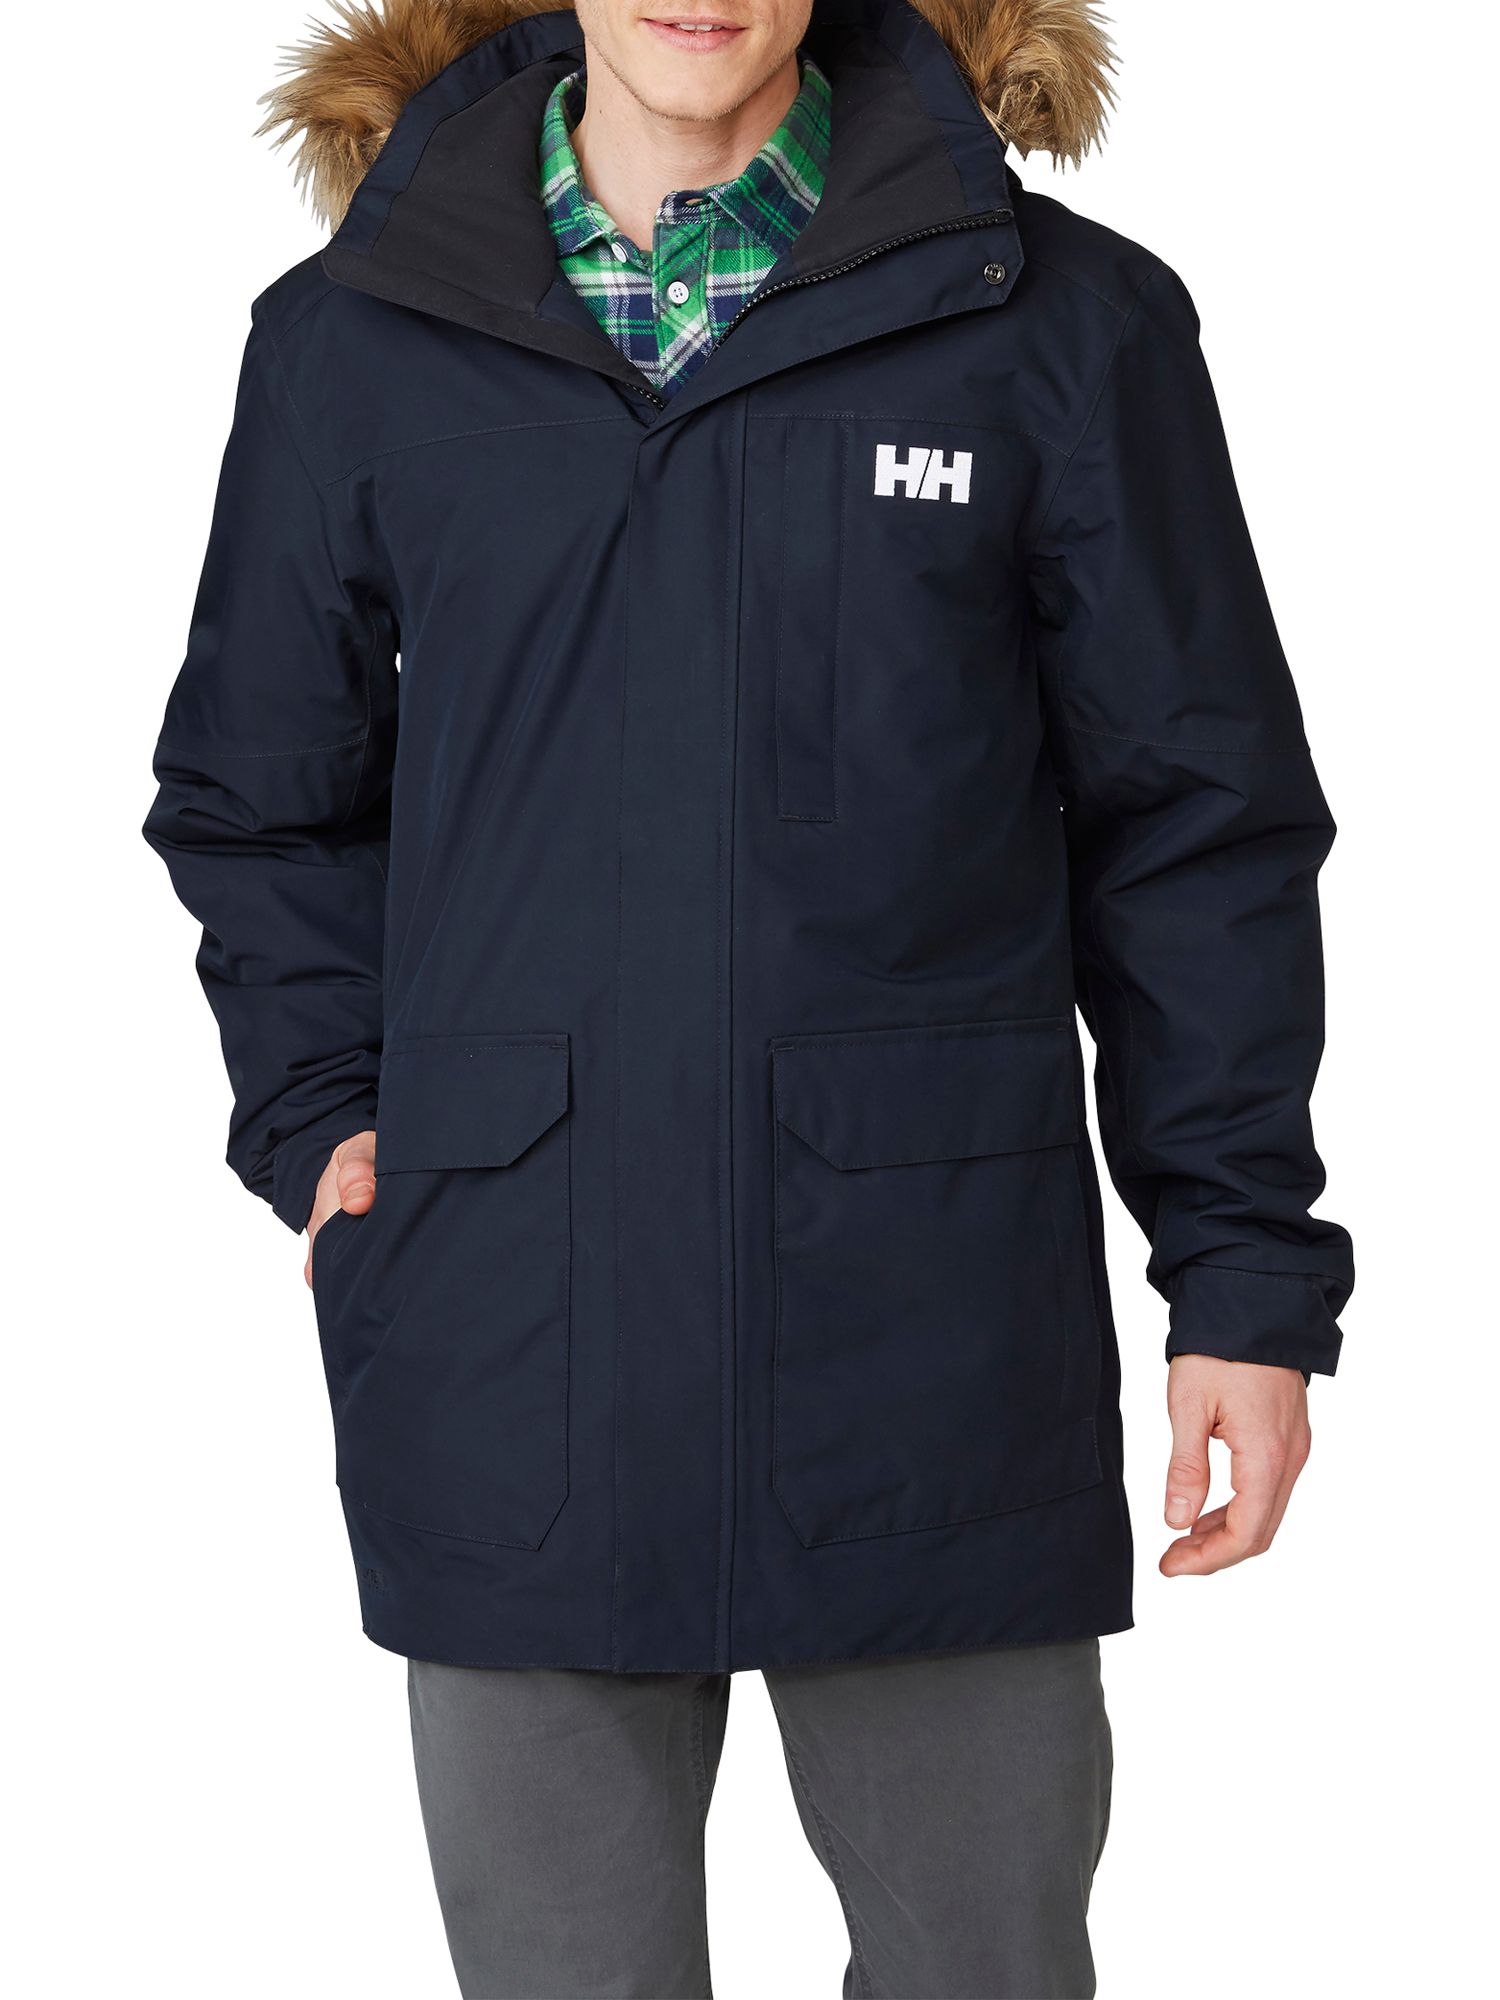 Helly Hansen Dubliner Waterproof Insulated Men's Parka Jacket, Navy